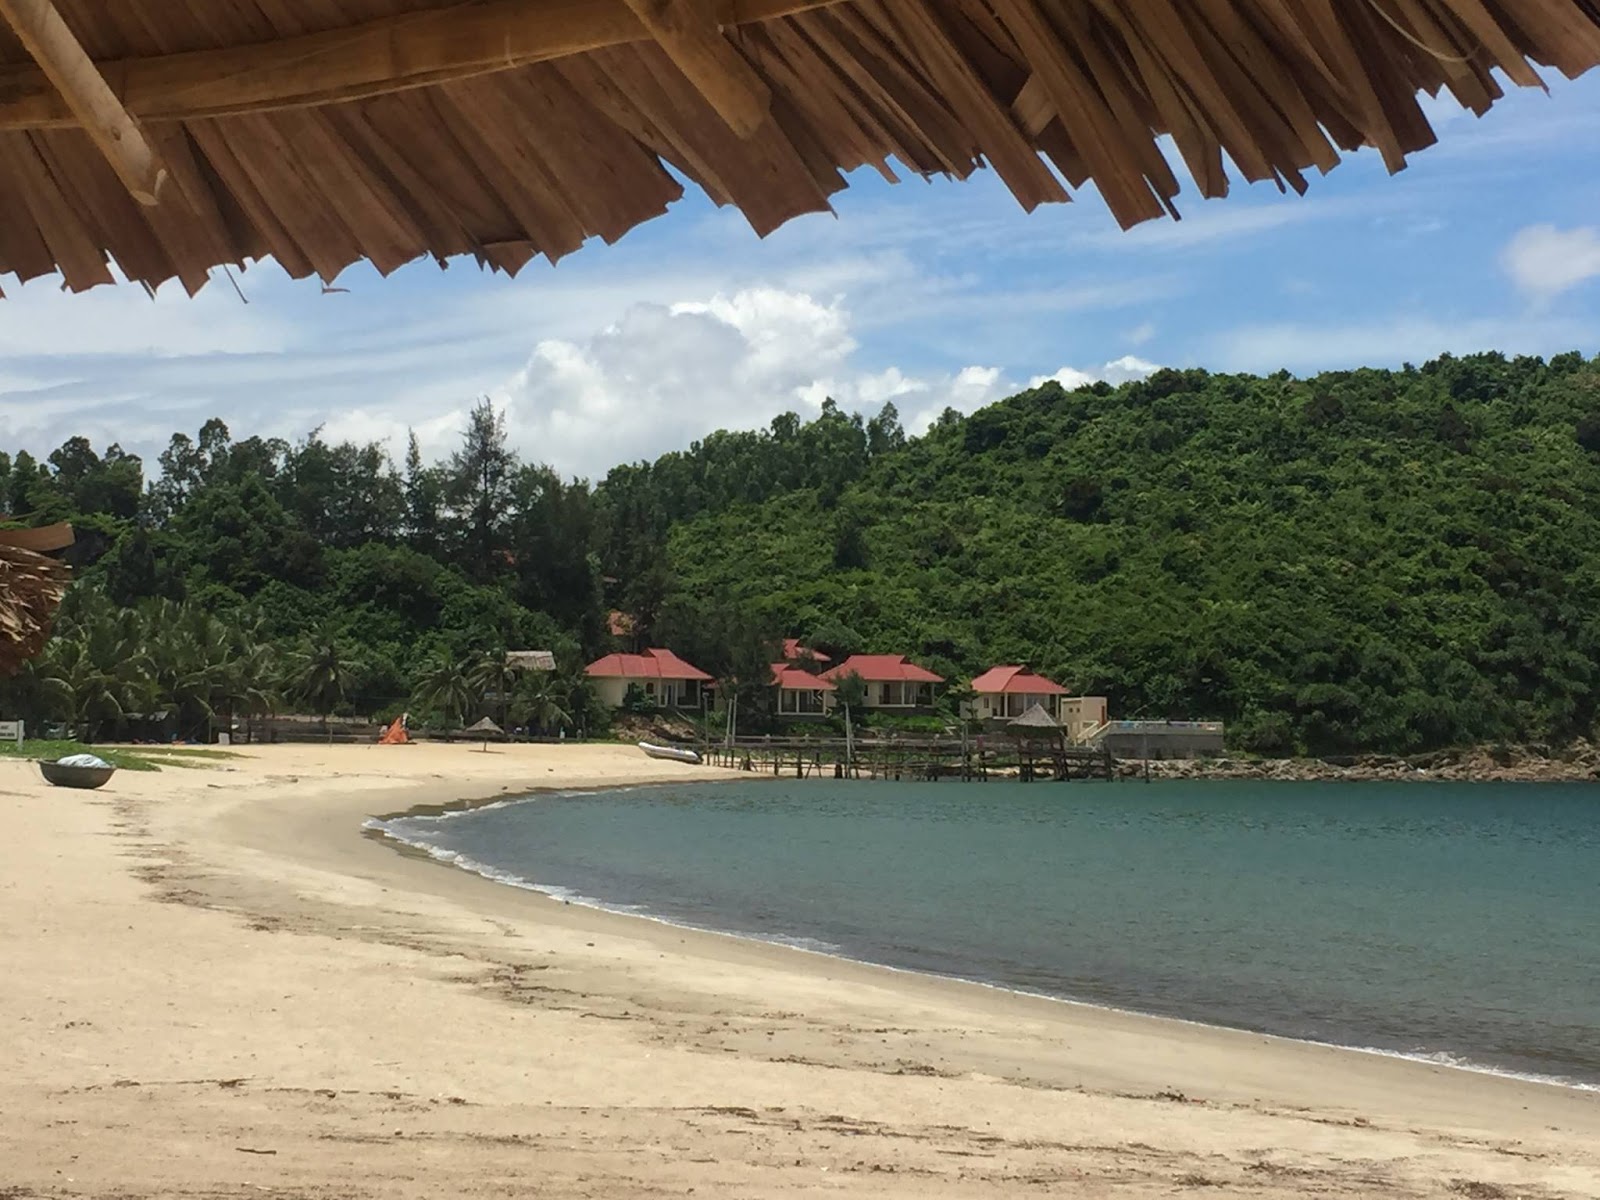 Foto de Tien Sa Beach - lugar popular entre os apreciadores de relaxamento